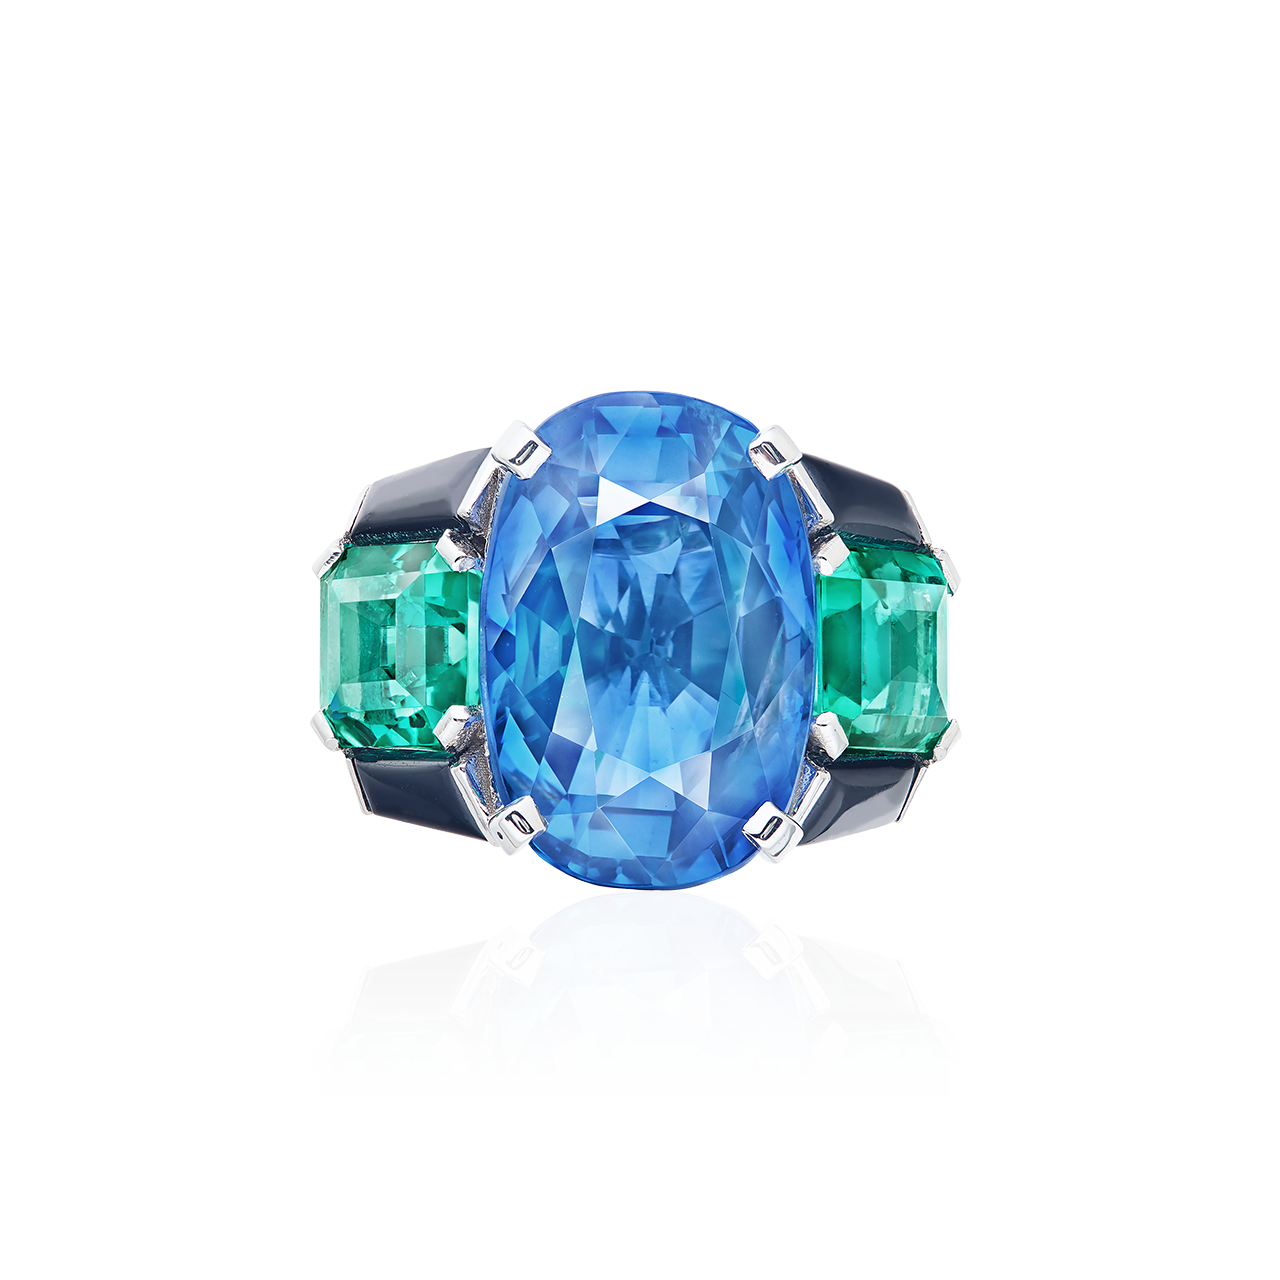 14.94克拉 斯里蘭卡天然無燒藍寶與哥倫比亞無油祖母綠戒指
Blue Sapphire from Sri Lanka 
and Colombian Emerald Ring